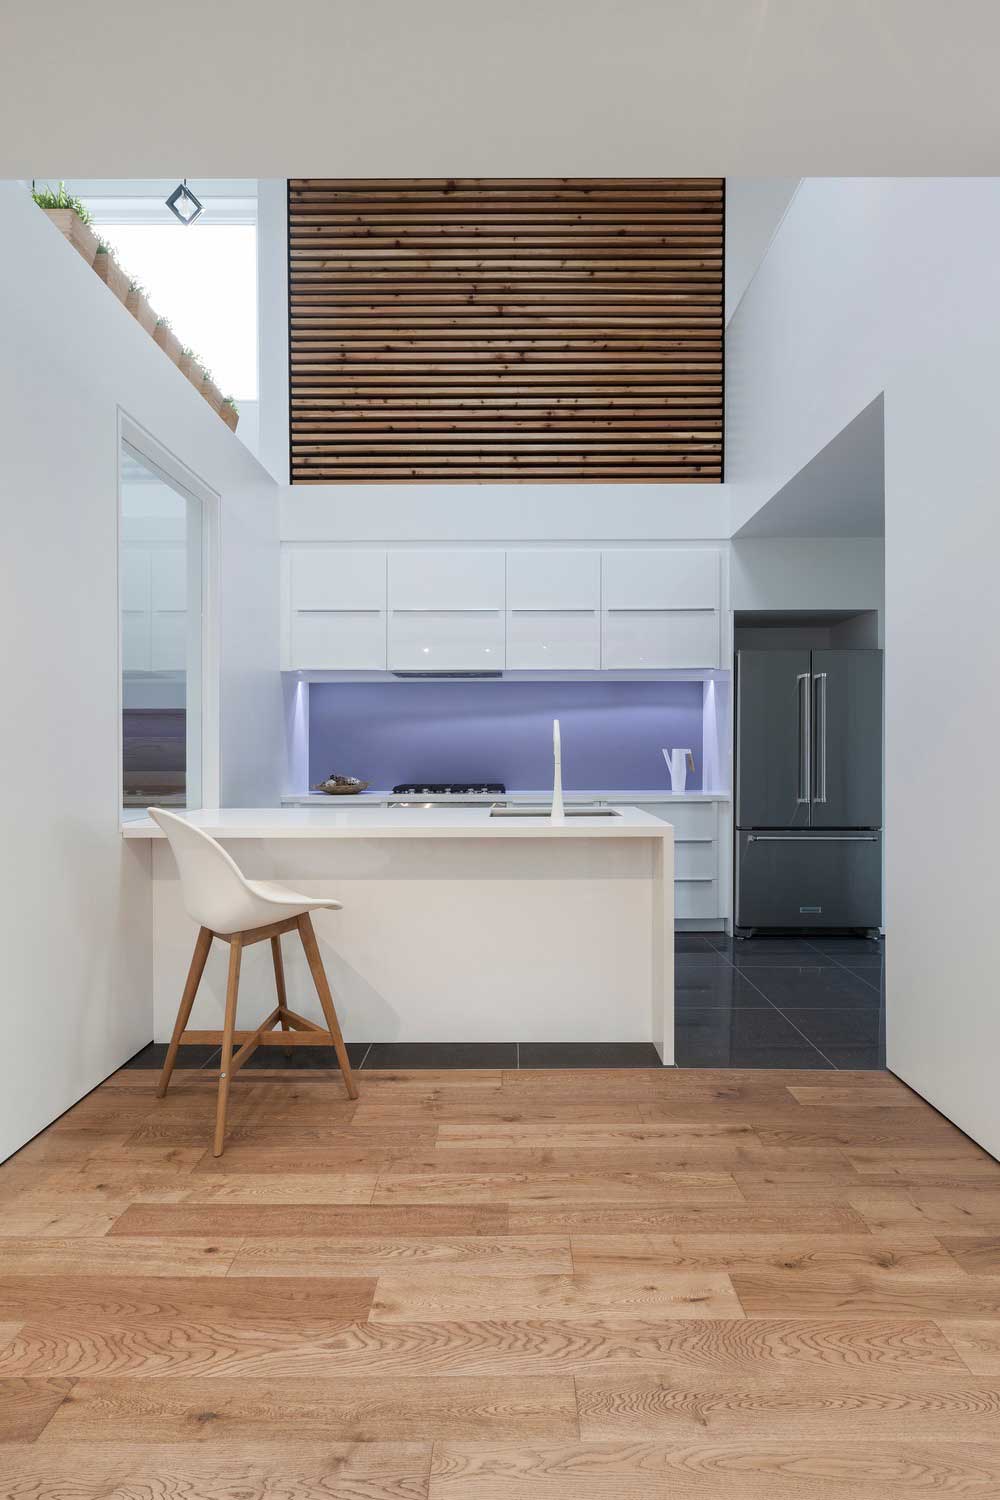 bungalow extension kitchen design - Flipped House